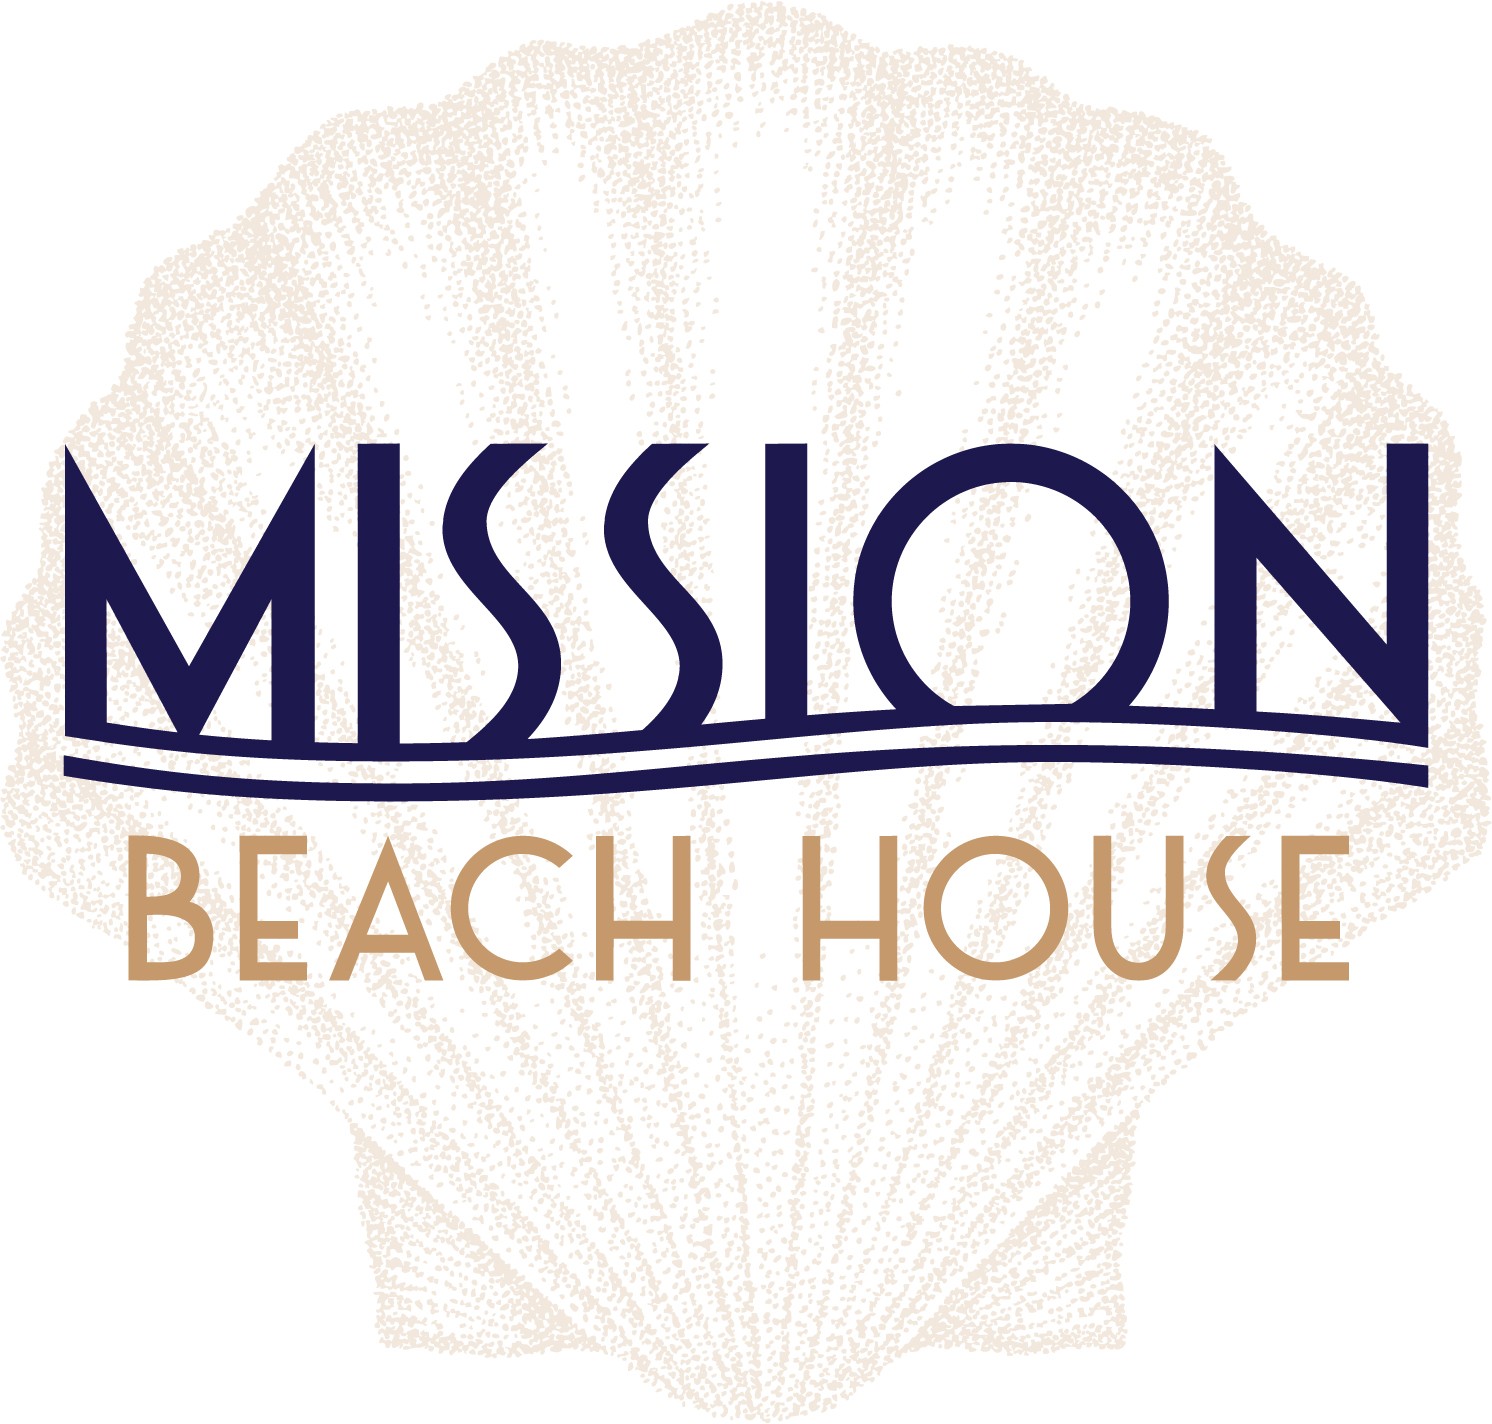 Mission Beach House - Revere